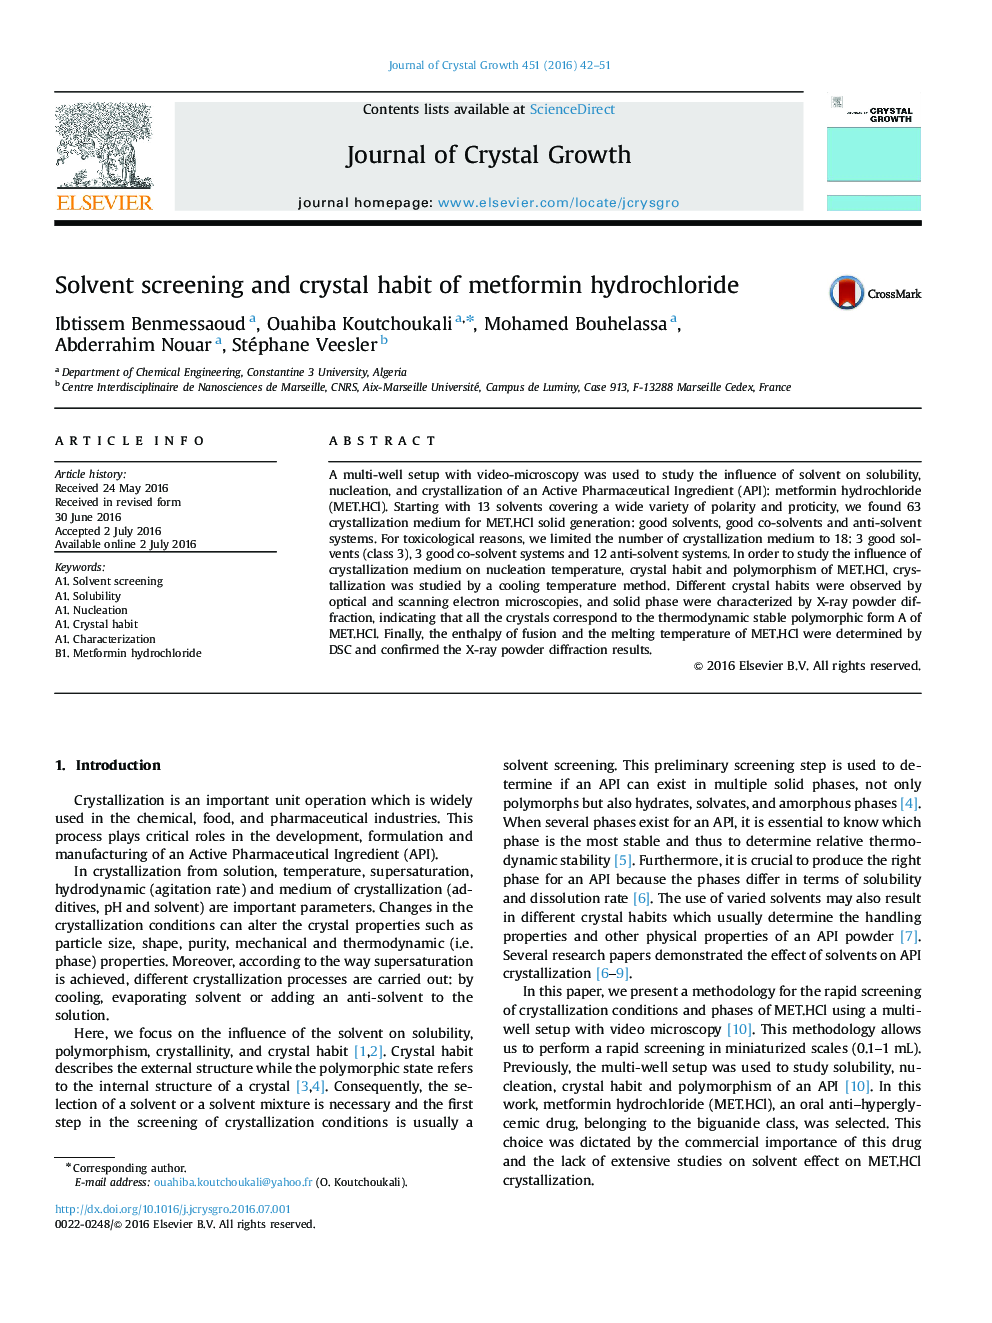 Solvent screening and crystal habit of metformin hydrochloride